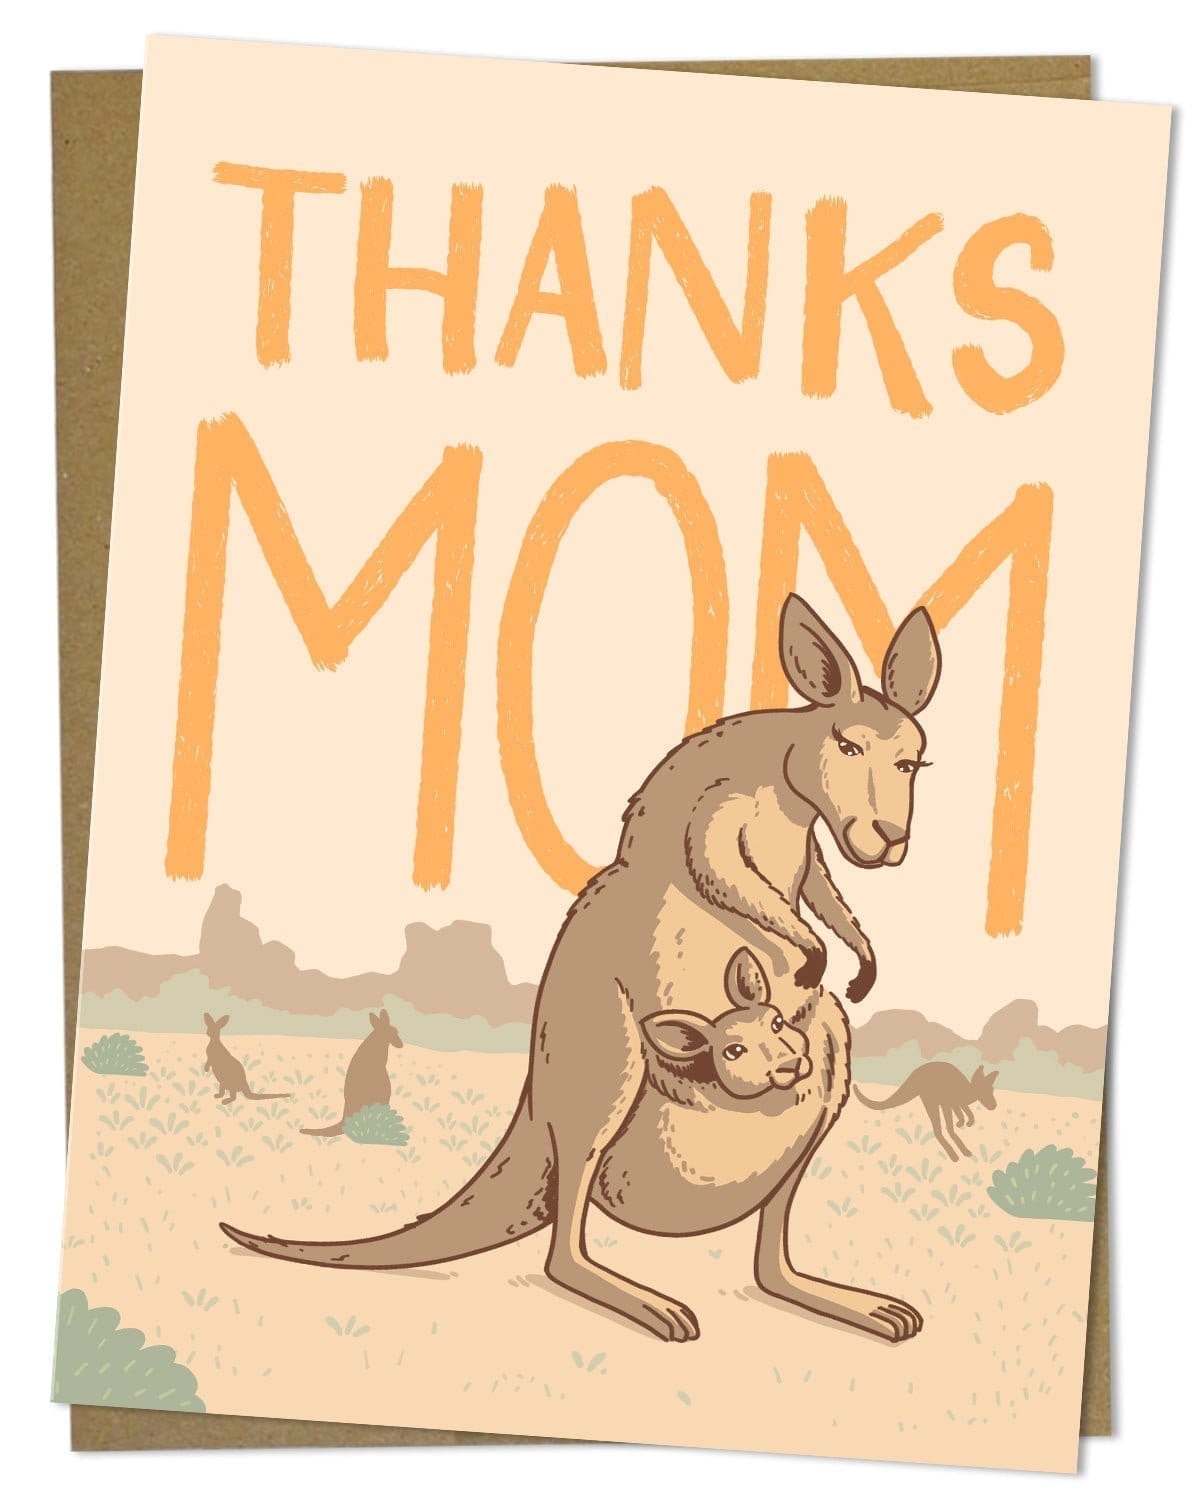 Thanks-Mom-Kangaroo-Card-Cognitive-Surplus-2.jpg